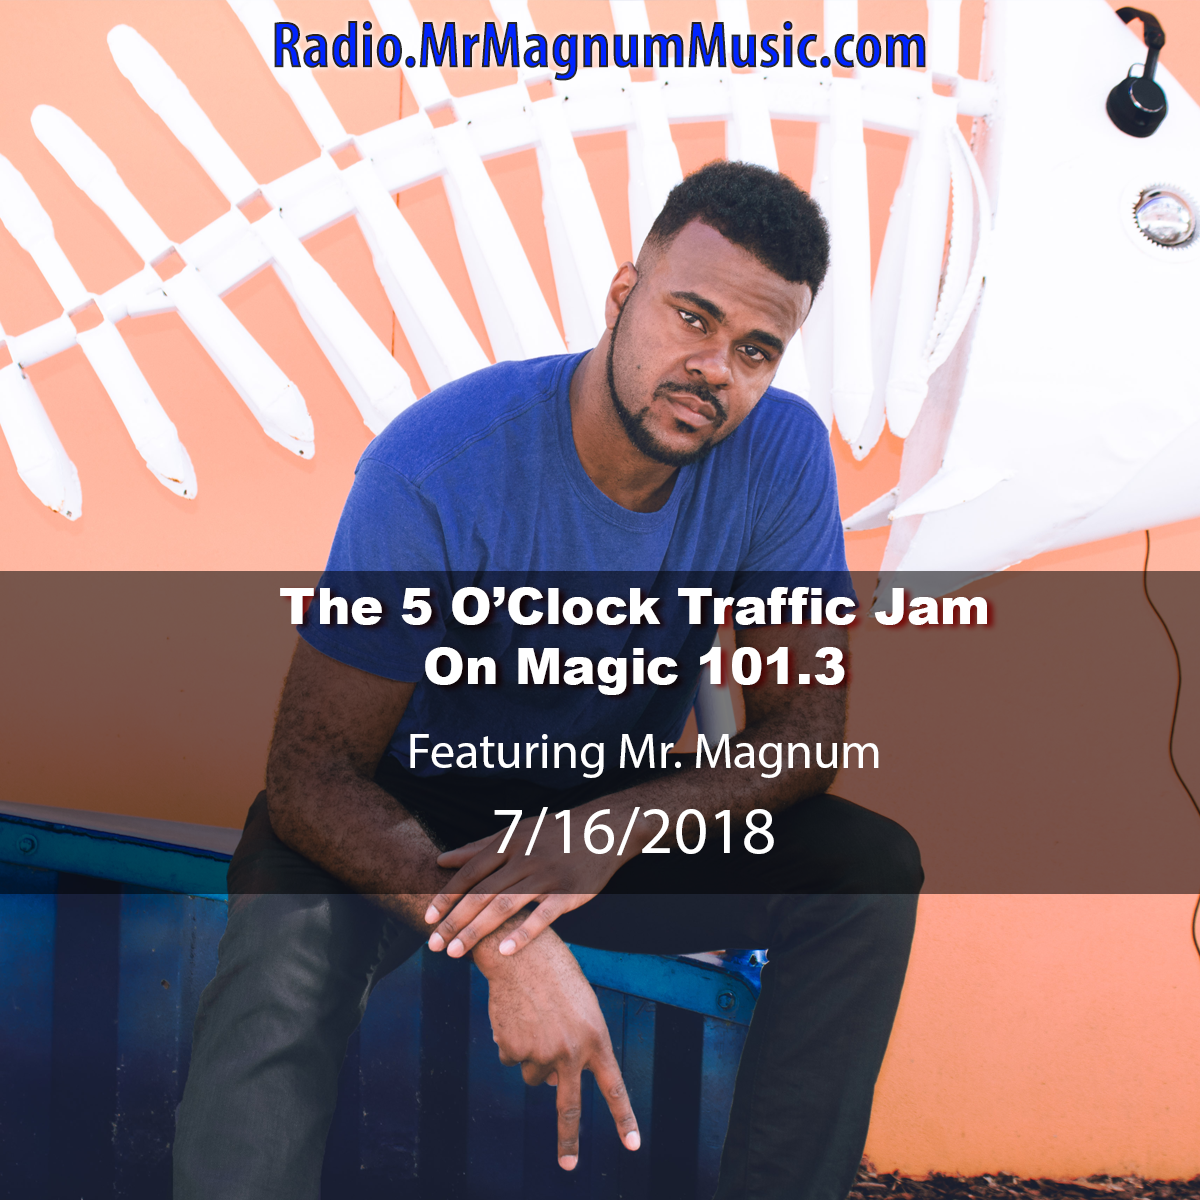 The 5 O'Clock Traffic Jam 20180716 featuring Gainesville's #1 DJ, Mr. Magnum on Magic 101.3